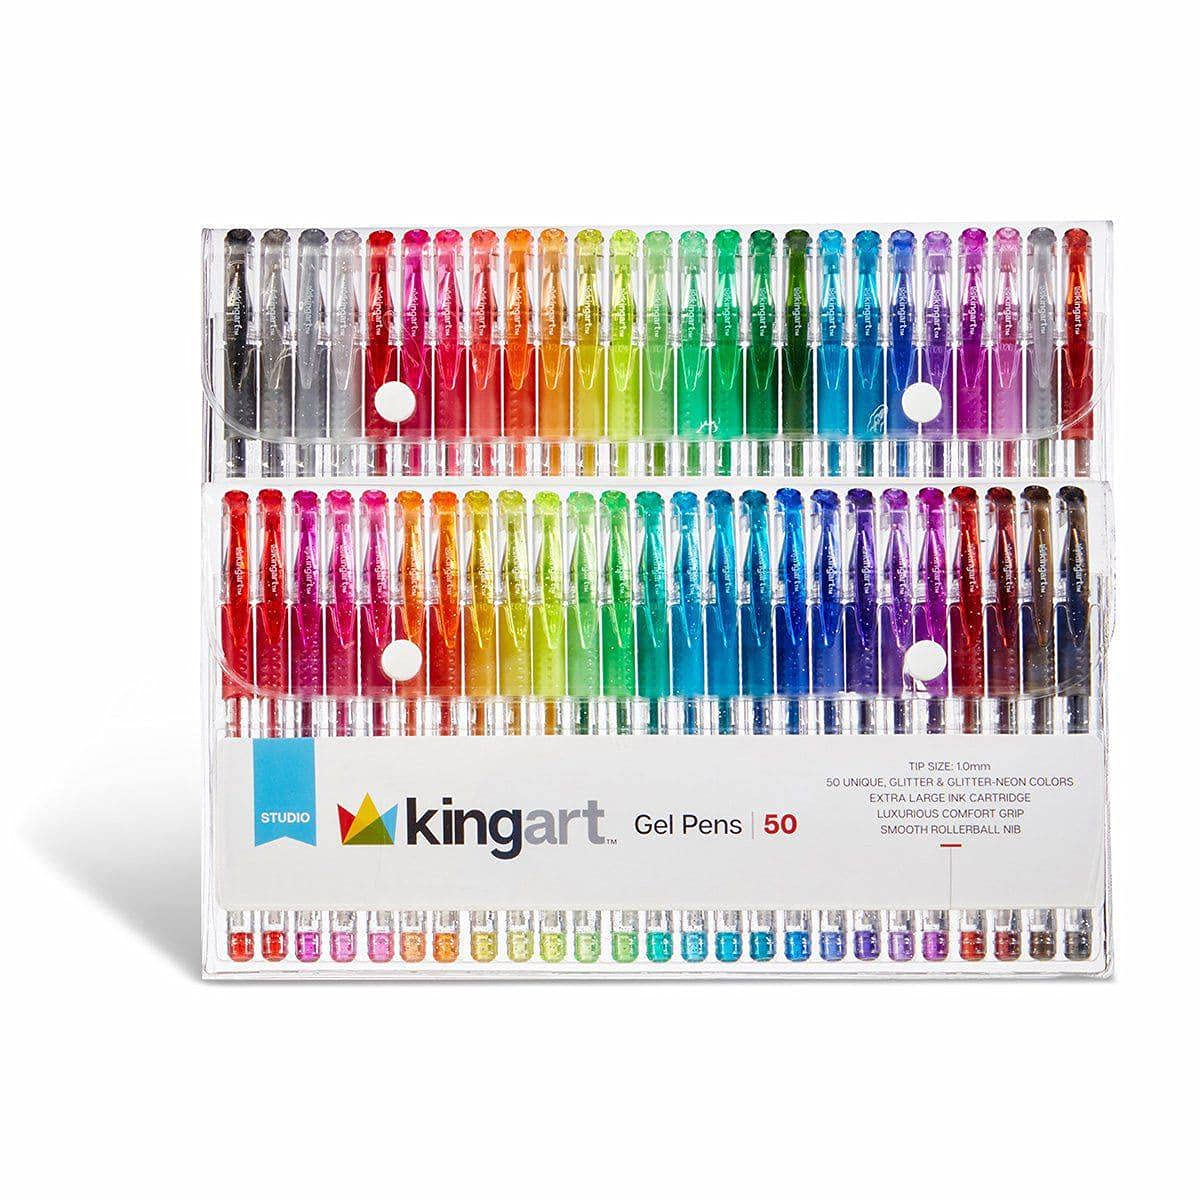 Aen Art Gel Pens Refills for Adult Coloring Books, 80 Unique Colors, 40%  More Ink Colored Gel Pens Set